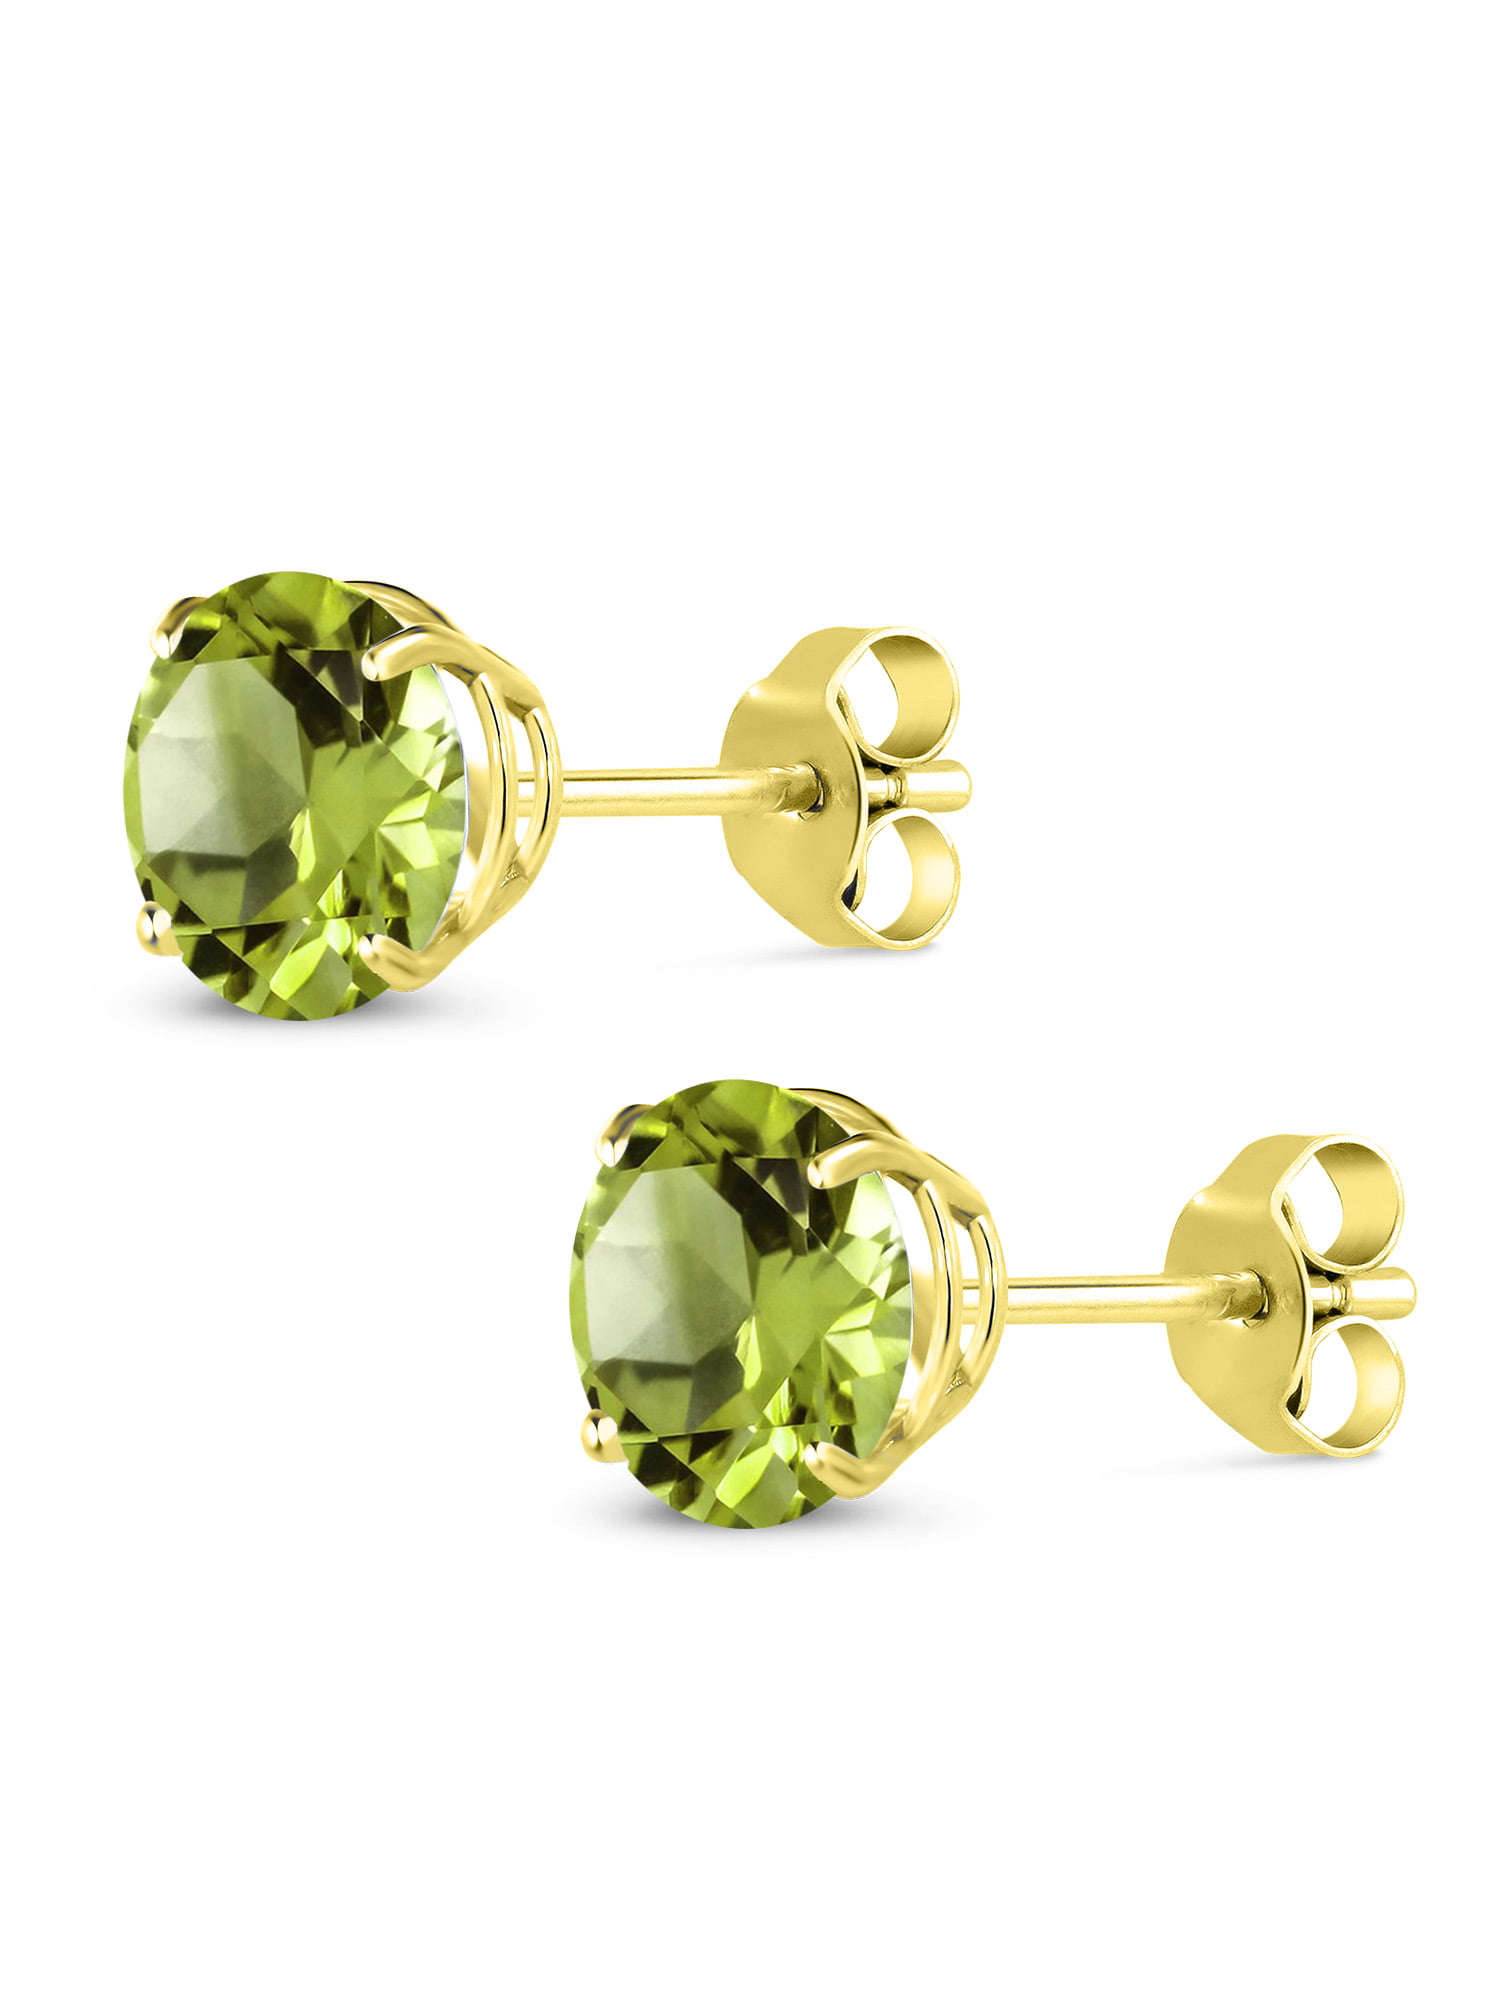 Gem Stone King 14K Yellow Gold Green Peridot Stud Earrings For